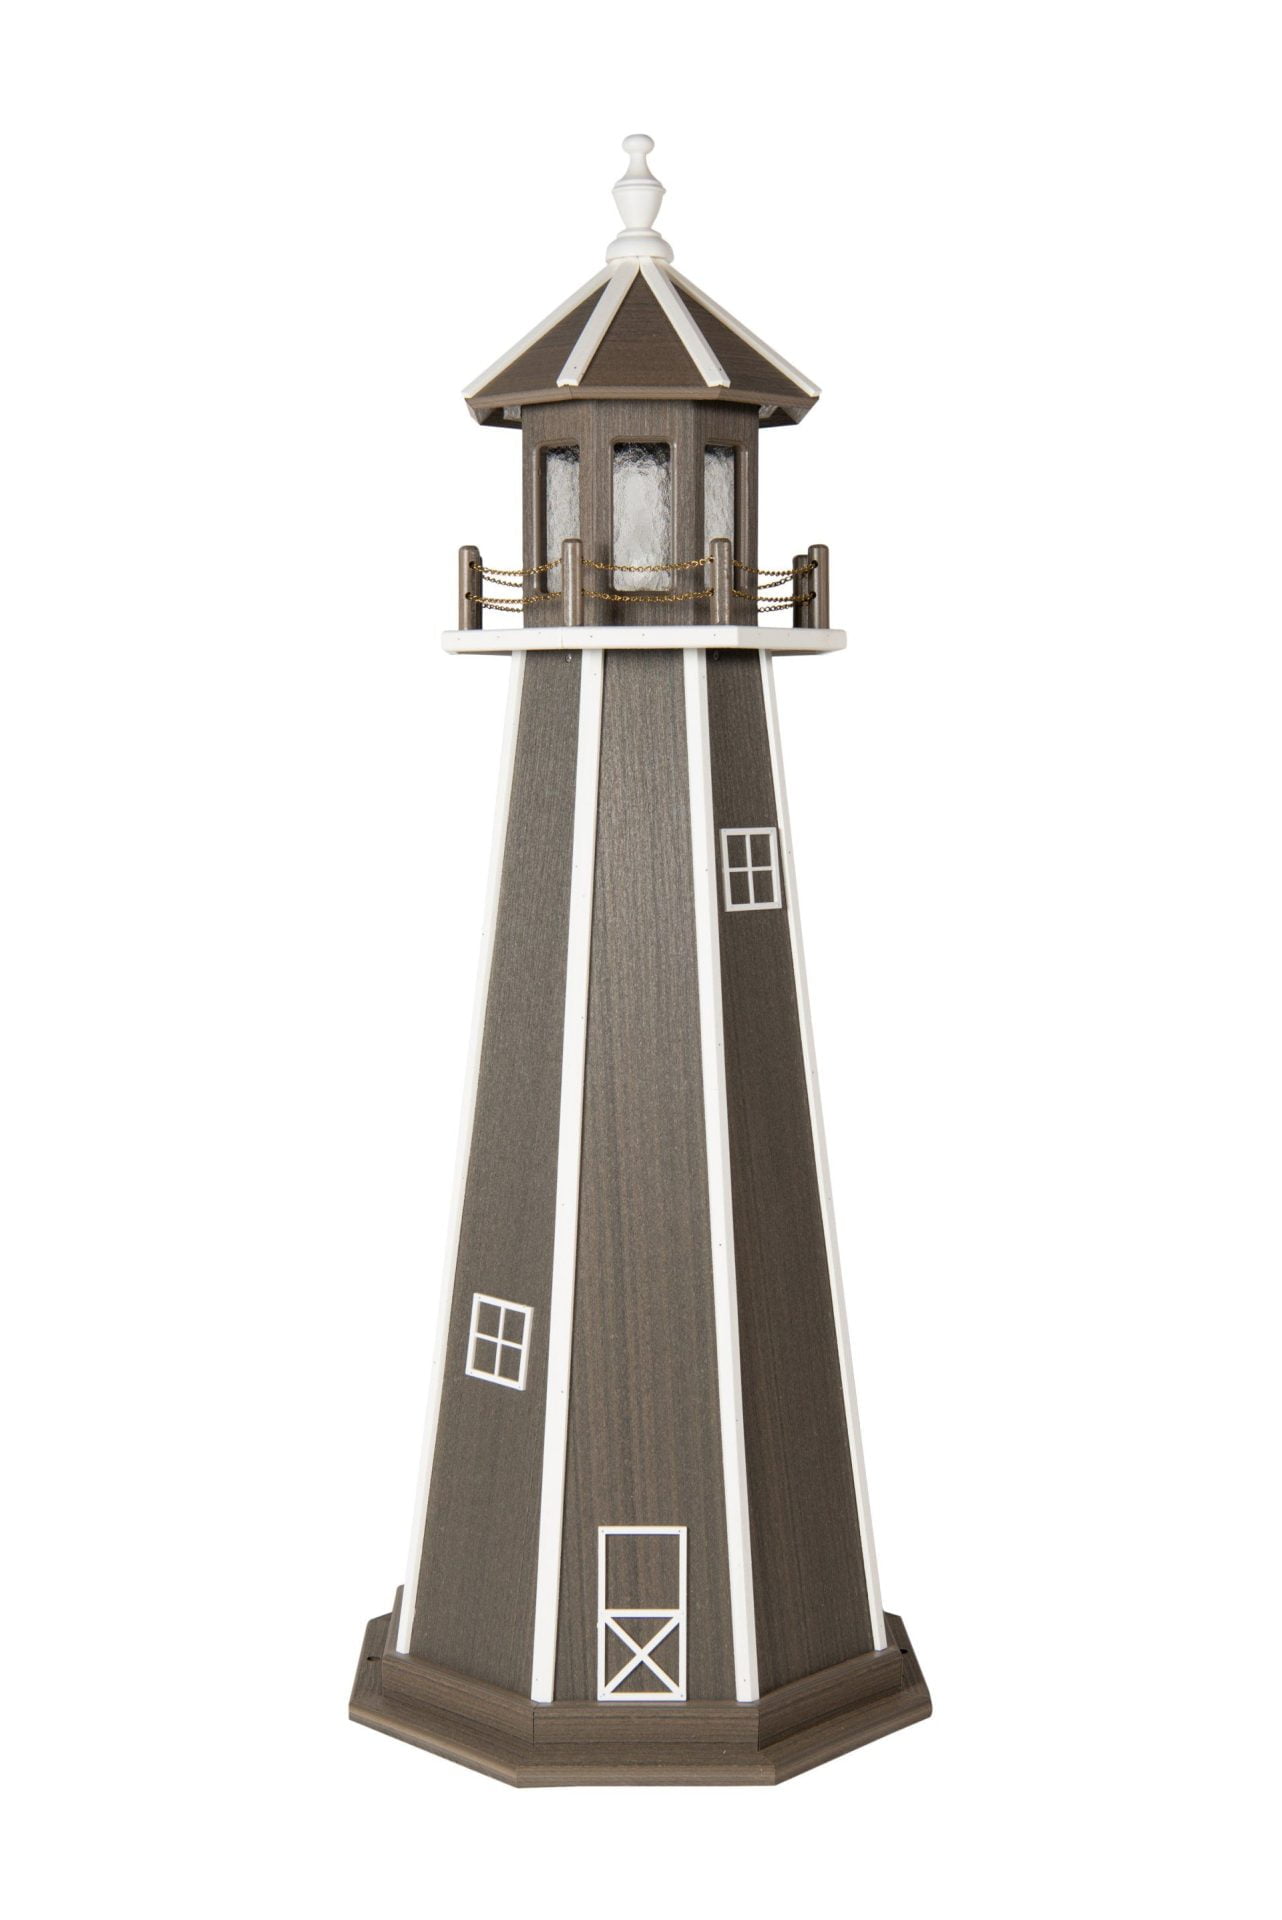 Standard Poly Woodgrain Lighthouse – Coastal Gray & White